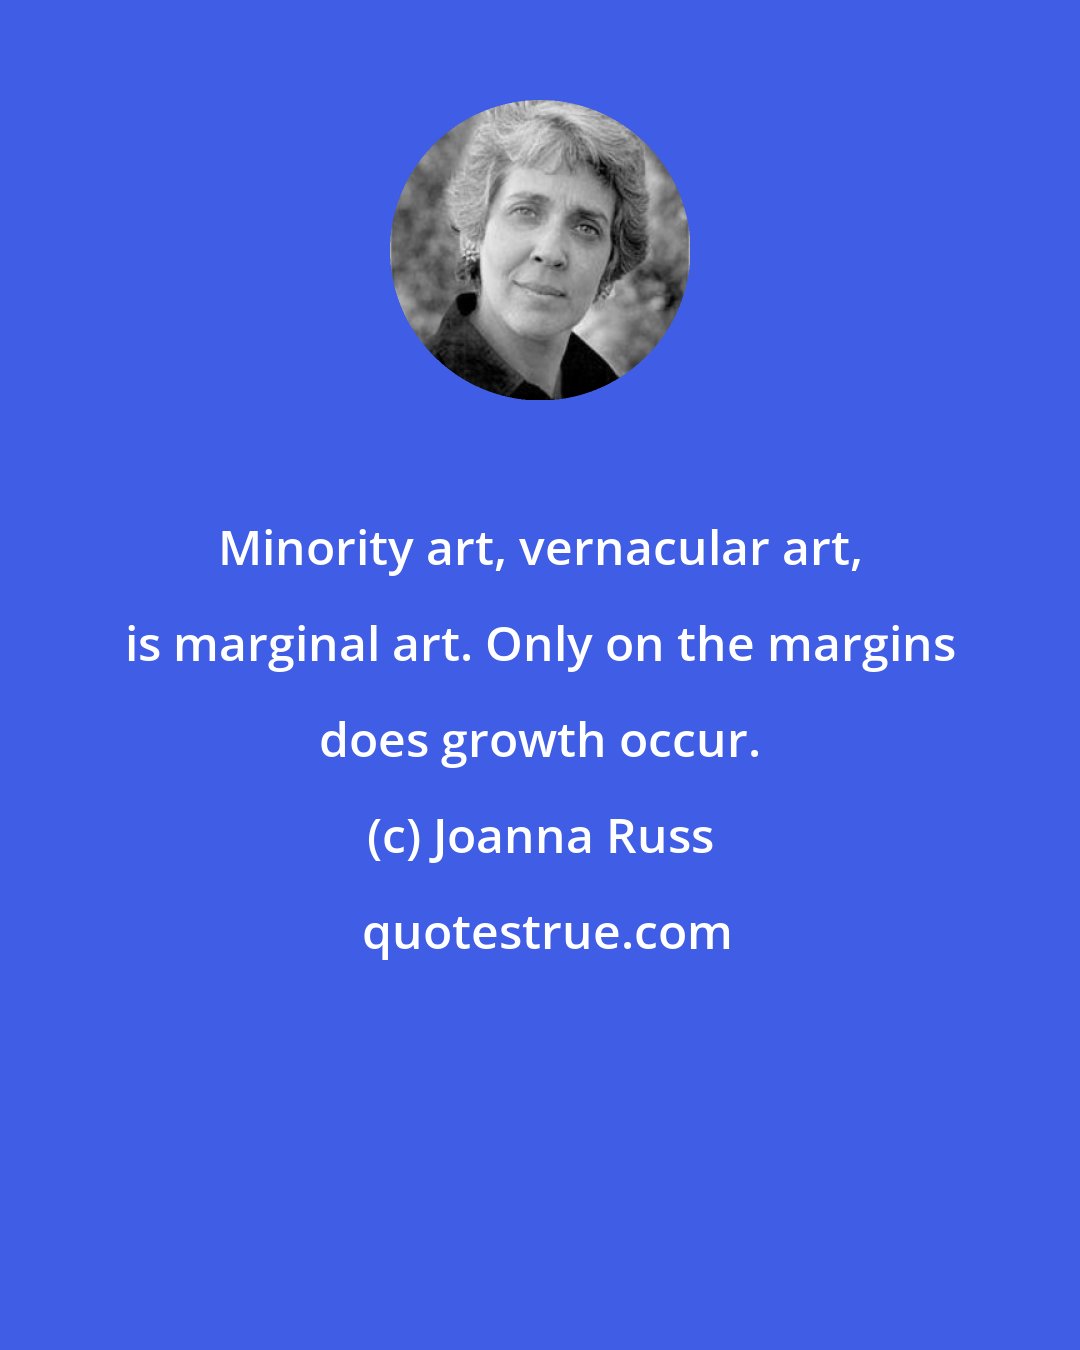 Joanna Russ: Minority art, vernacular art, is marginal art. Only on the margins does growth occur.